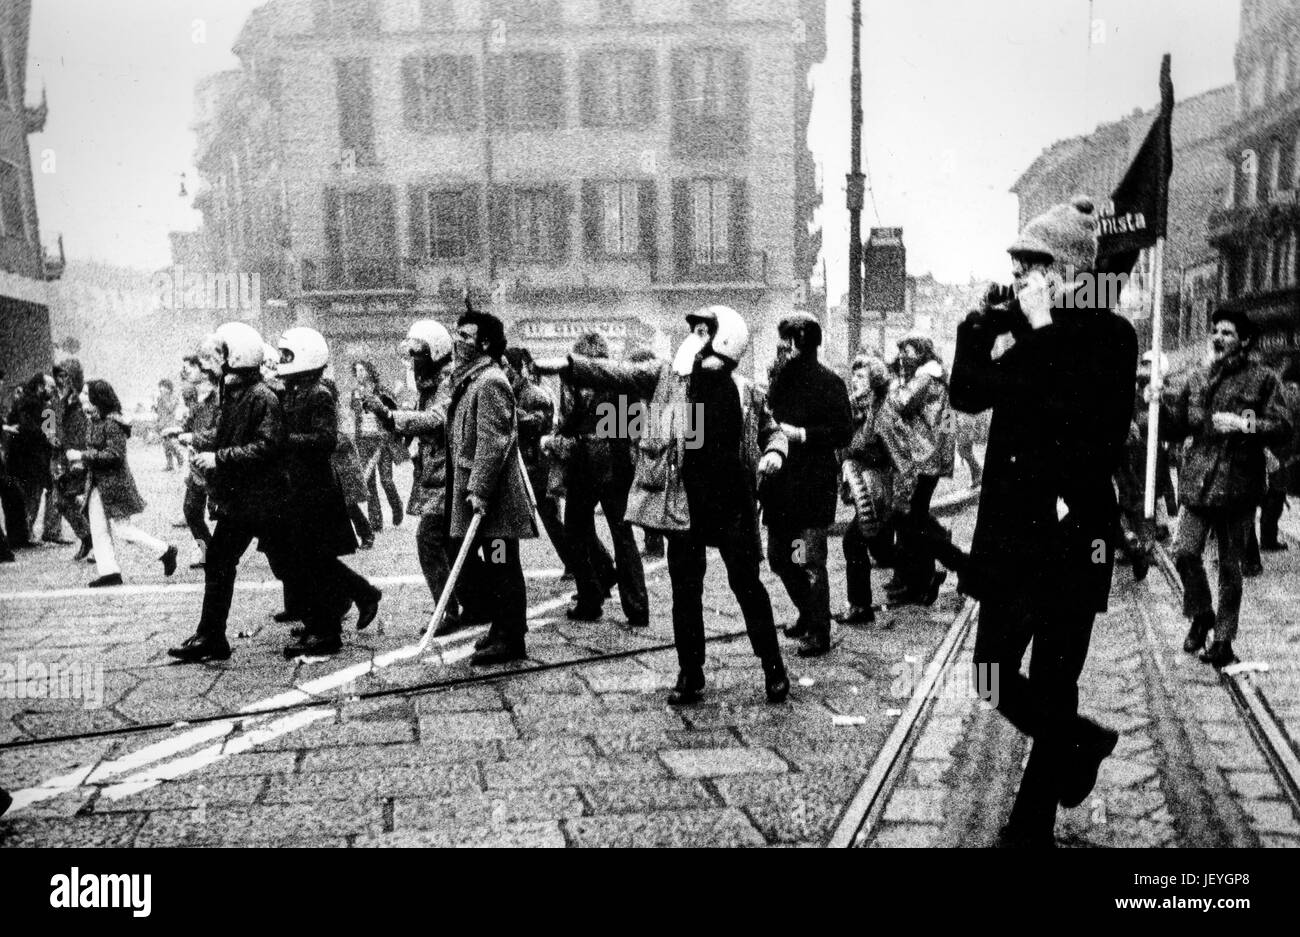 Manifestación anti-fascista, milano, 1975 Foto de stock